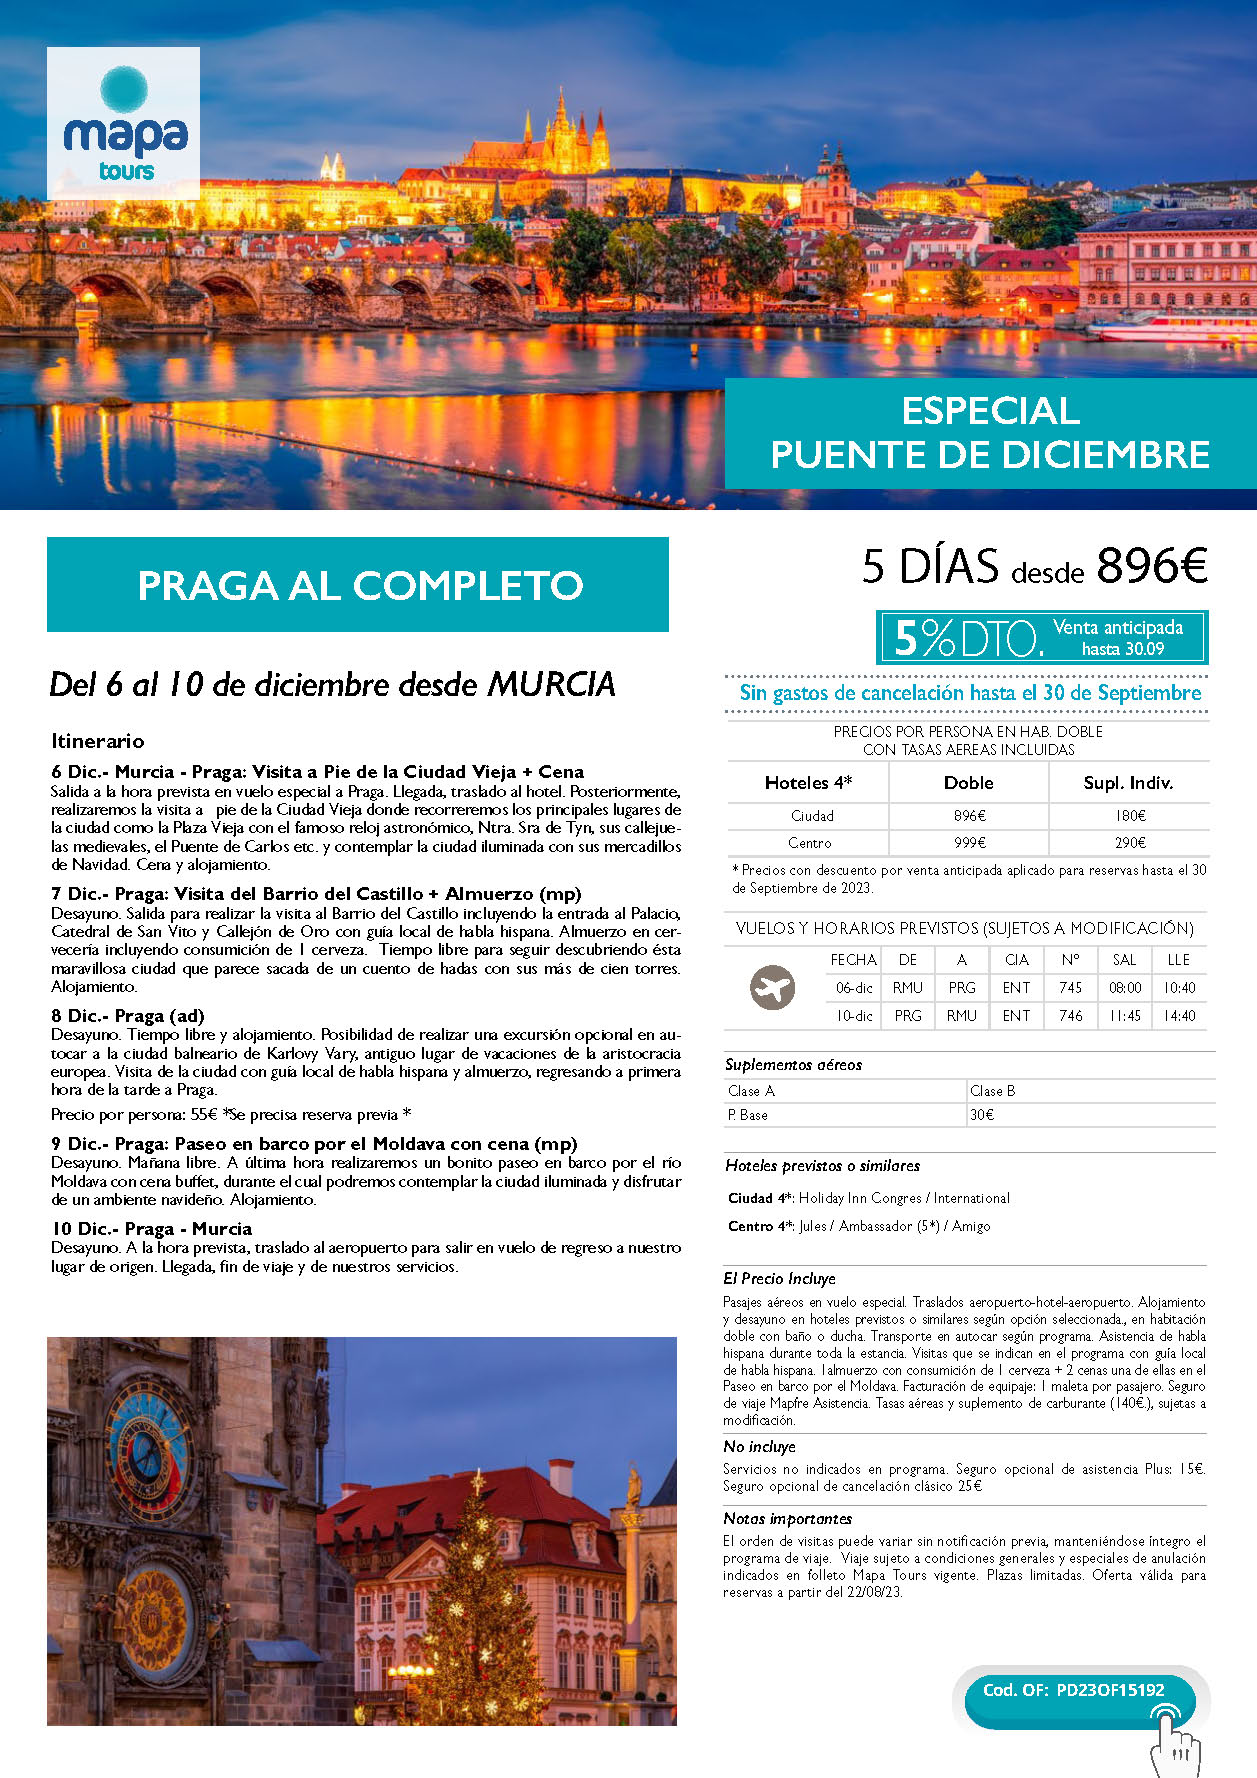 Oferta Mapa Tours Puente de Diciembre 2023 Praga al Completo 5 dias salida 6 diciembre en vuelo especial directo desde Murcia